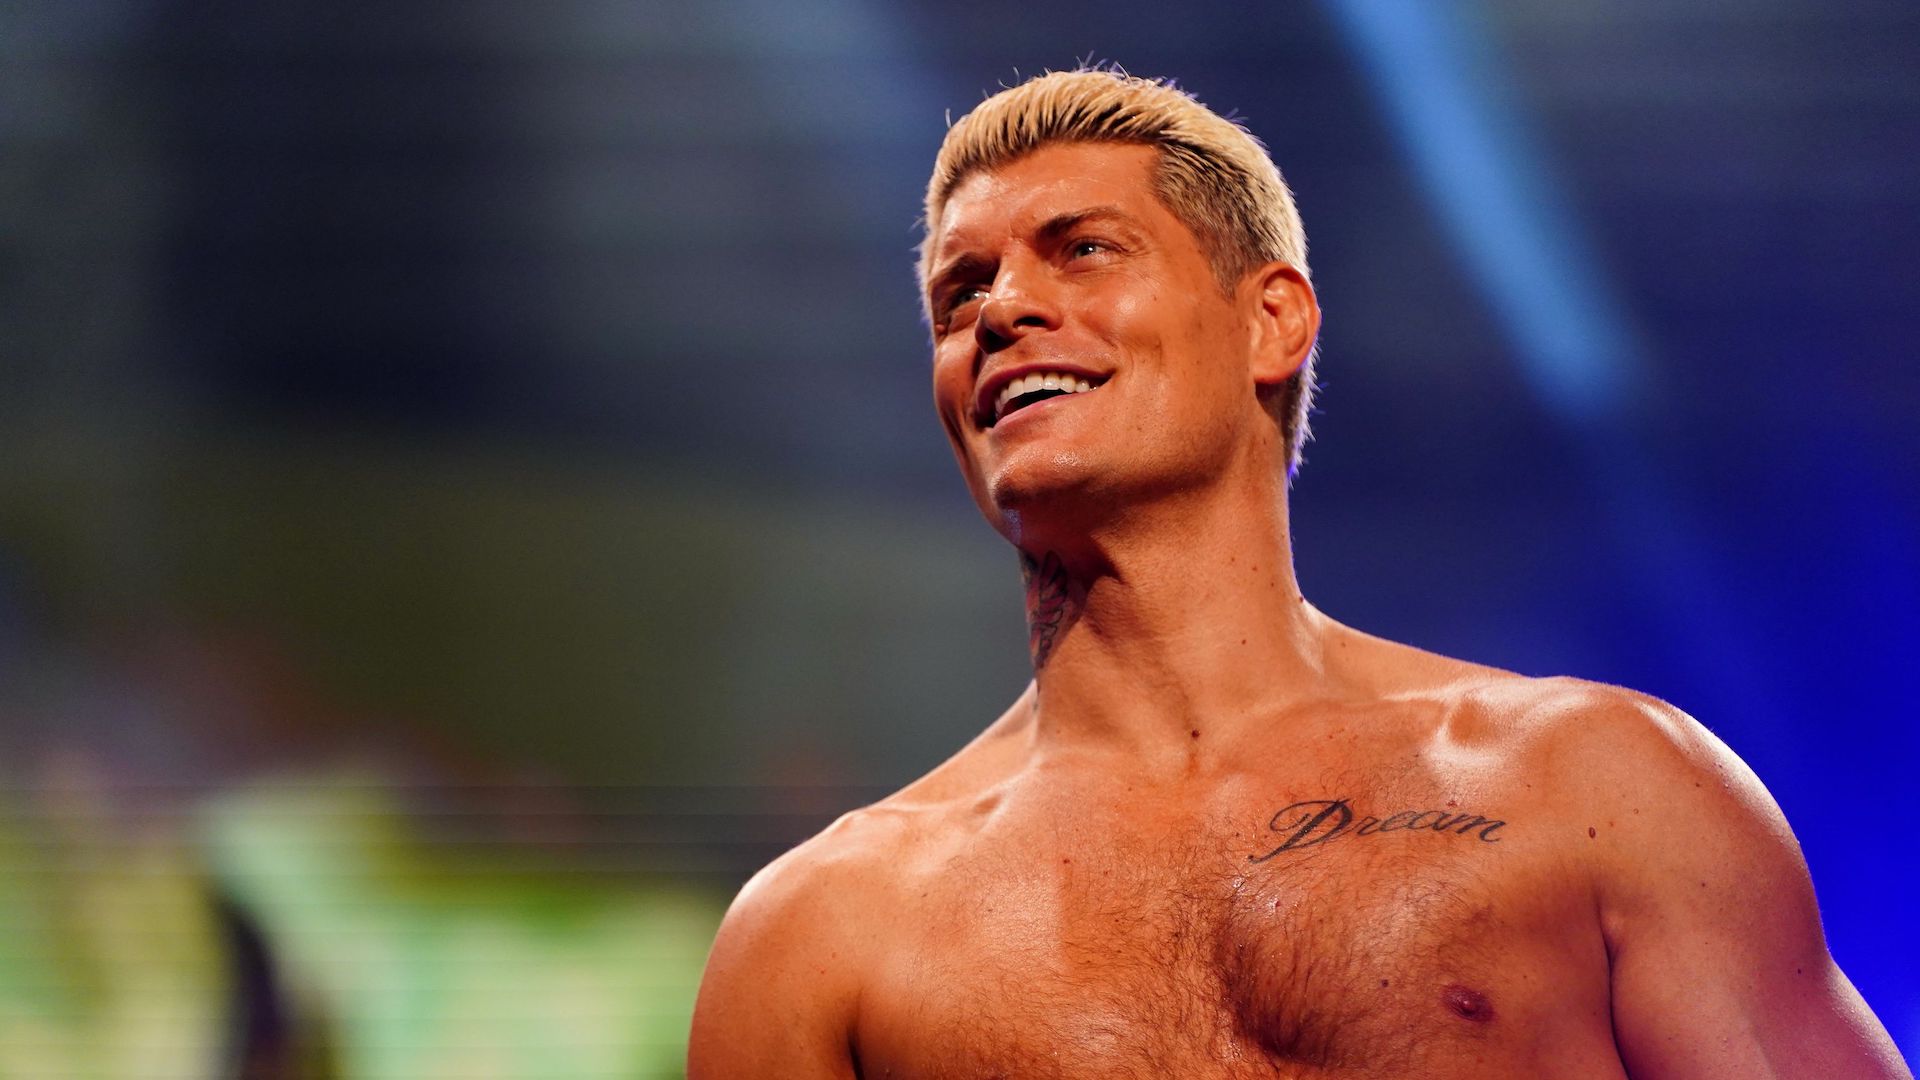 1. Cody Rhodes' Iconic Blonde Hair - wide 7